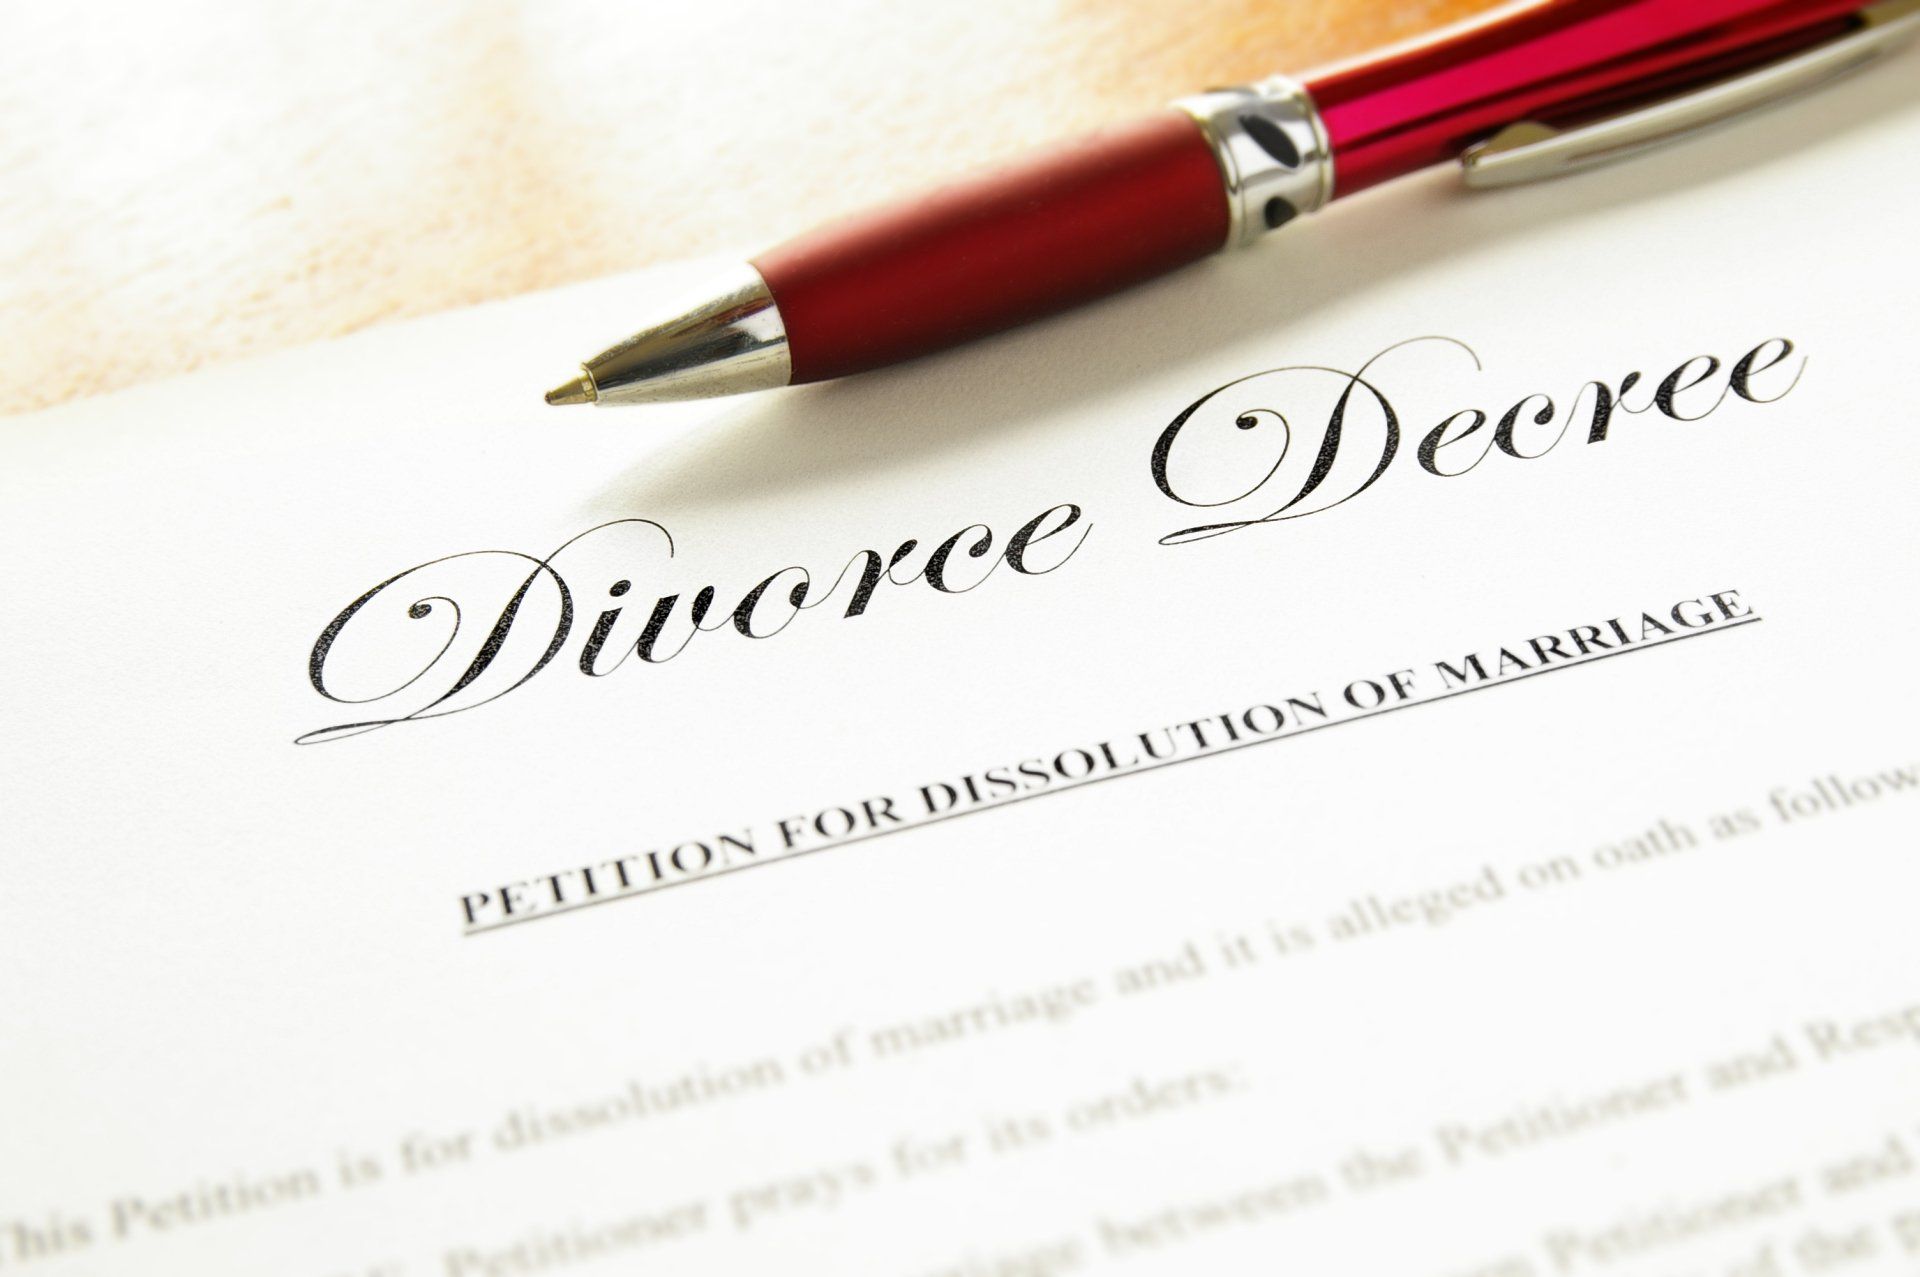 Child Custody & Divorce Law agreement